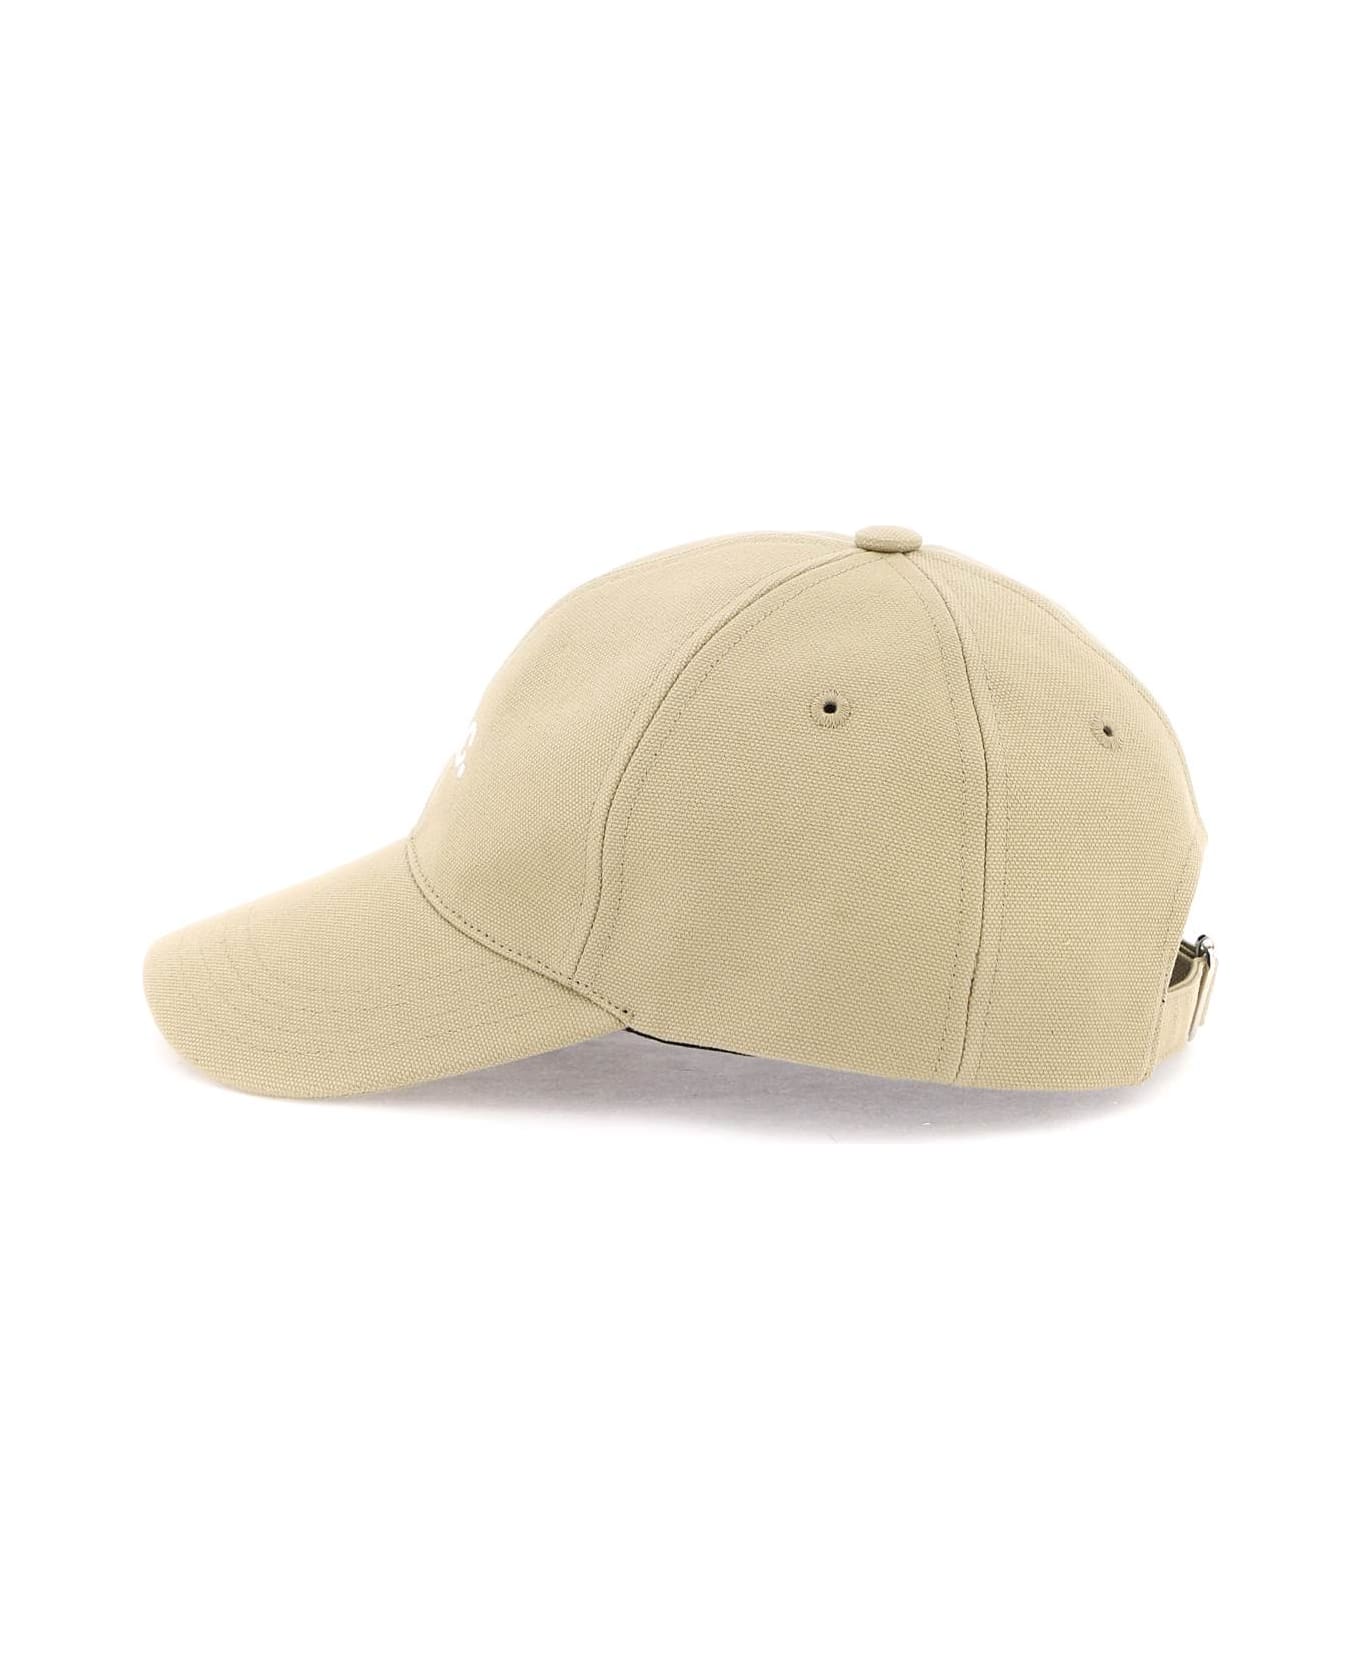 A.P.C. Charlie Baseball Cap - BEIGE 帽子